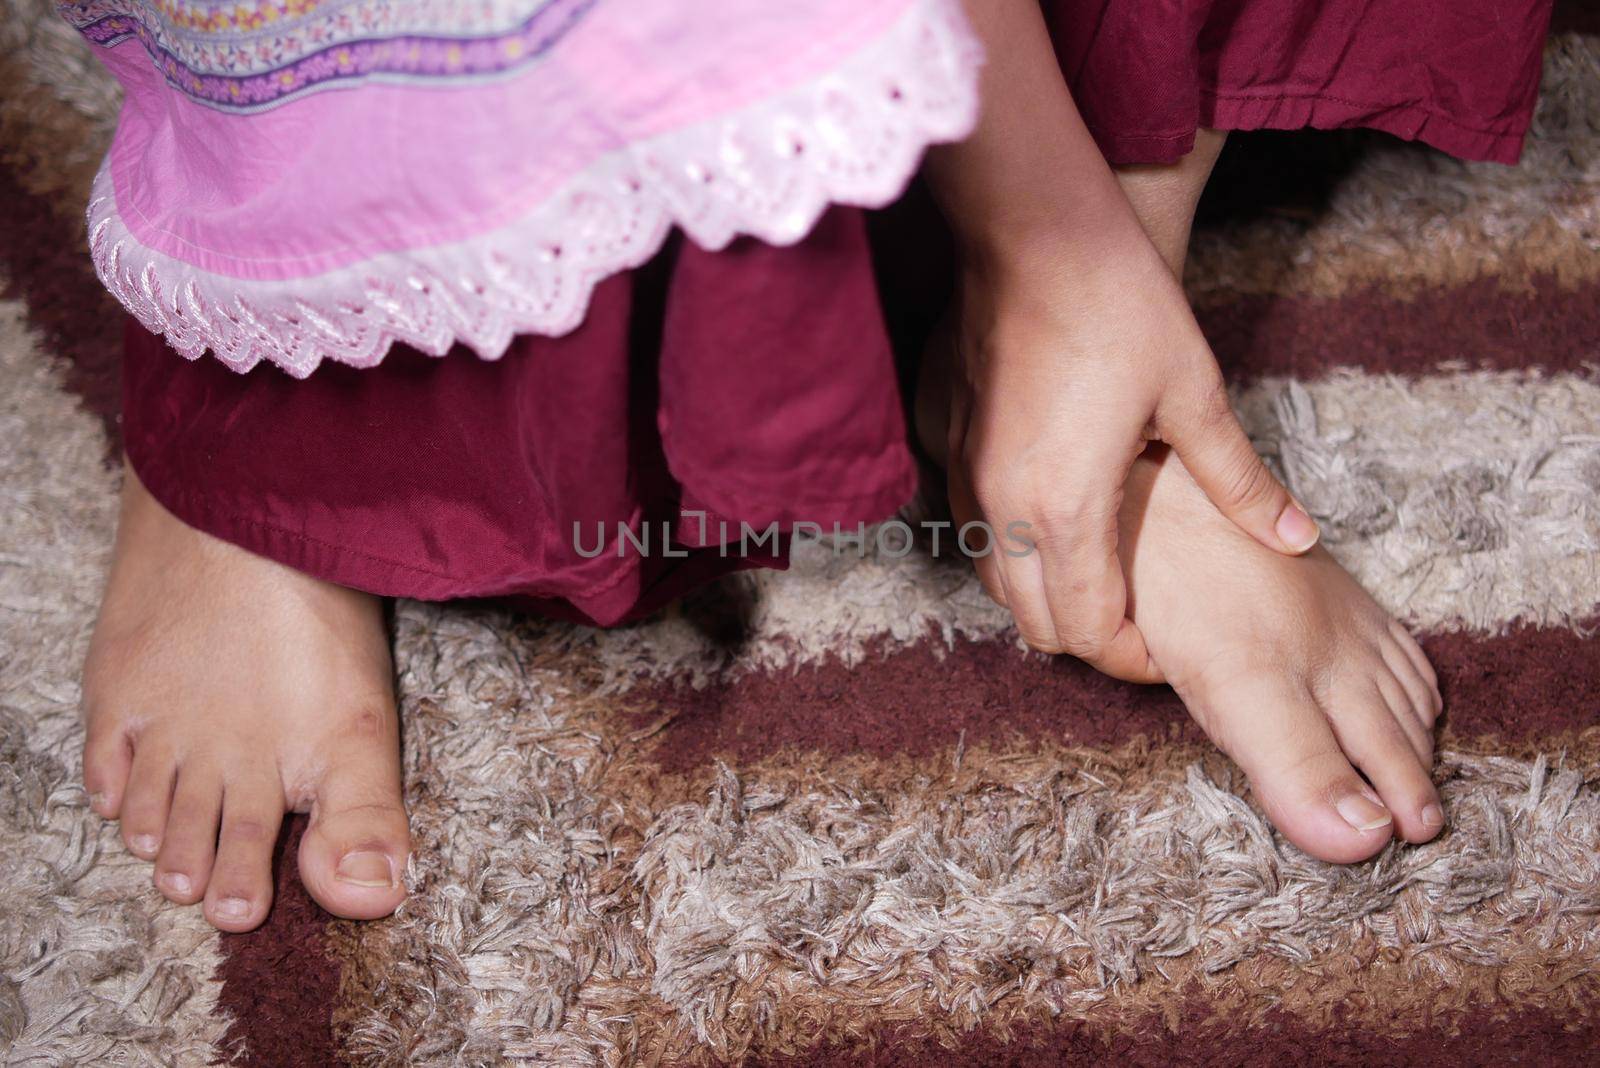 Close up on women feet and hand massage on injury spot